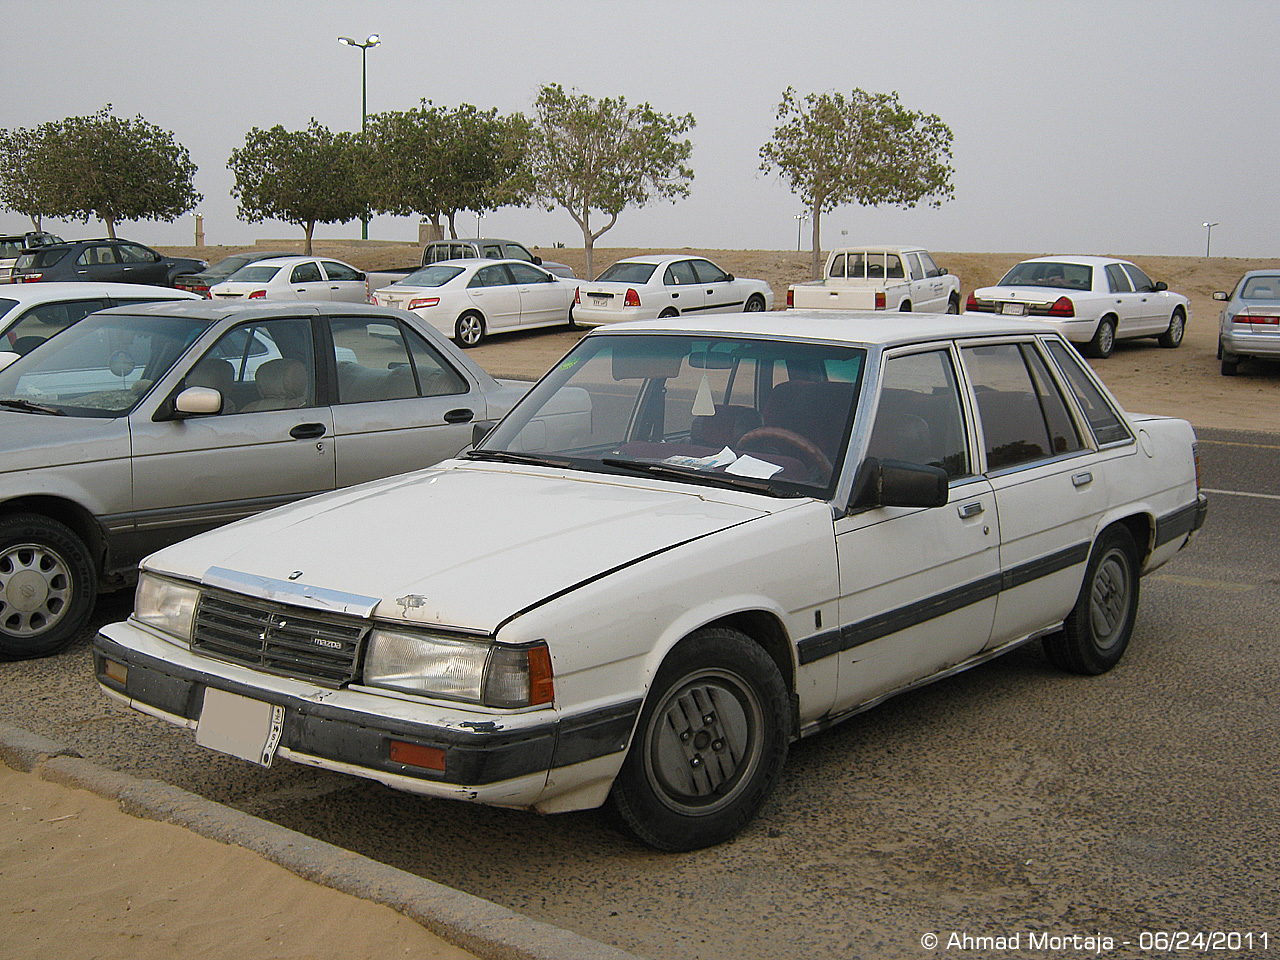 Mazda 929 (3rd generation : 1981-1986) | Flickr - Photo Sharing!